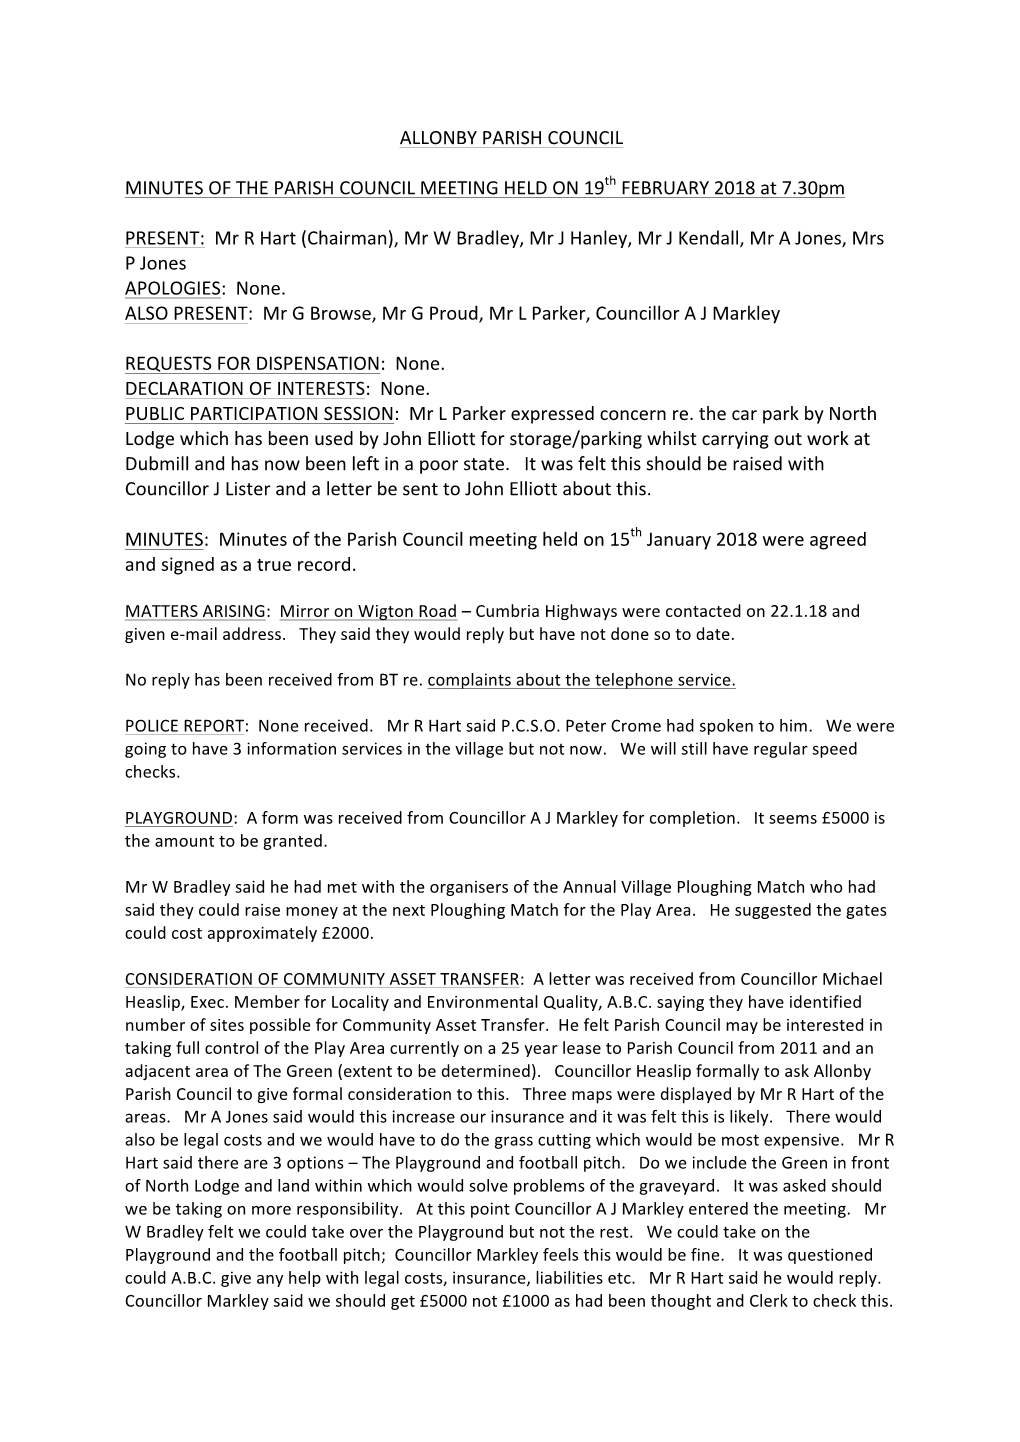 Allonby Parish Council Minutes of the Parish